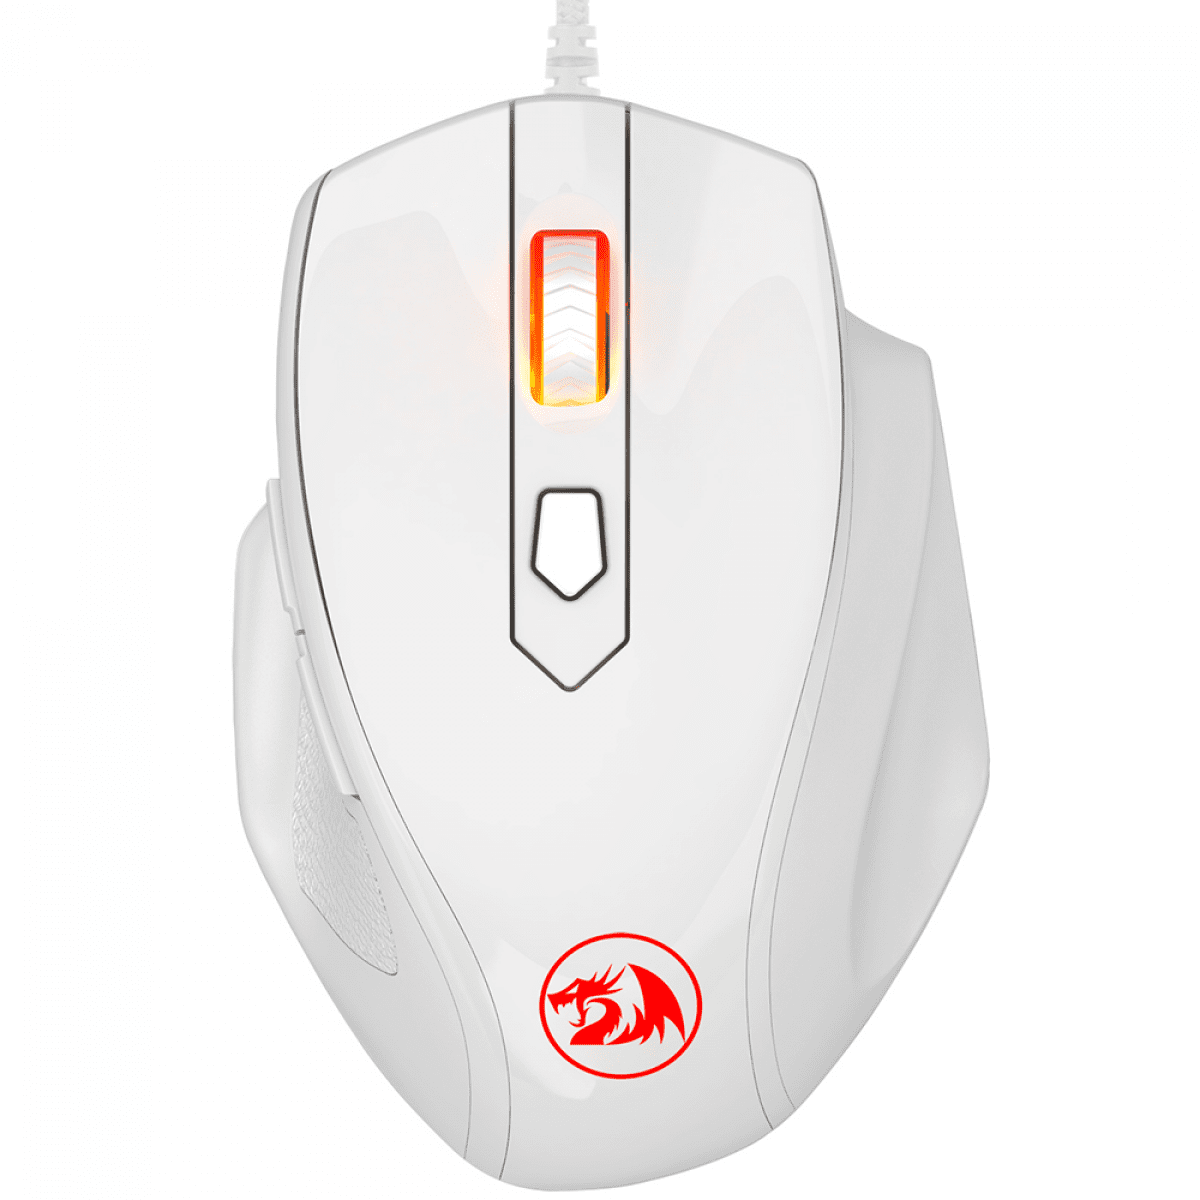 Mouse Gamer Redragon Tiger 2, 3200 DPI, 8 Botões, LED Vermelho, White, M709W